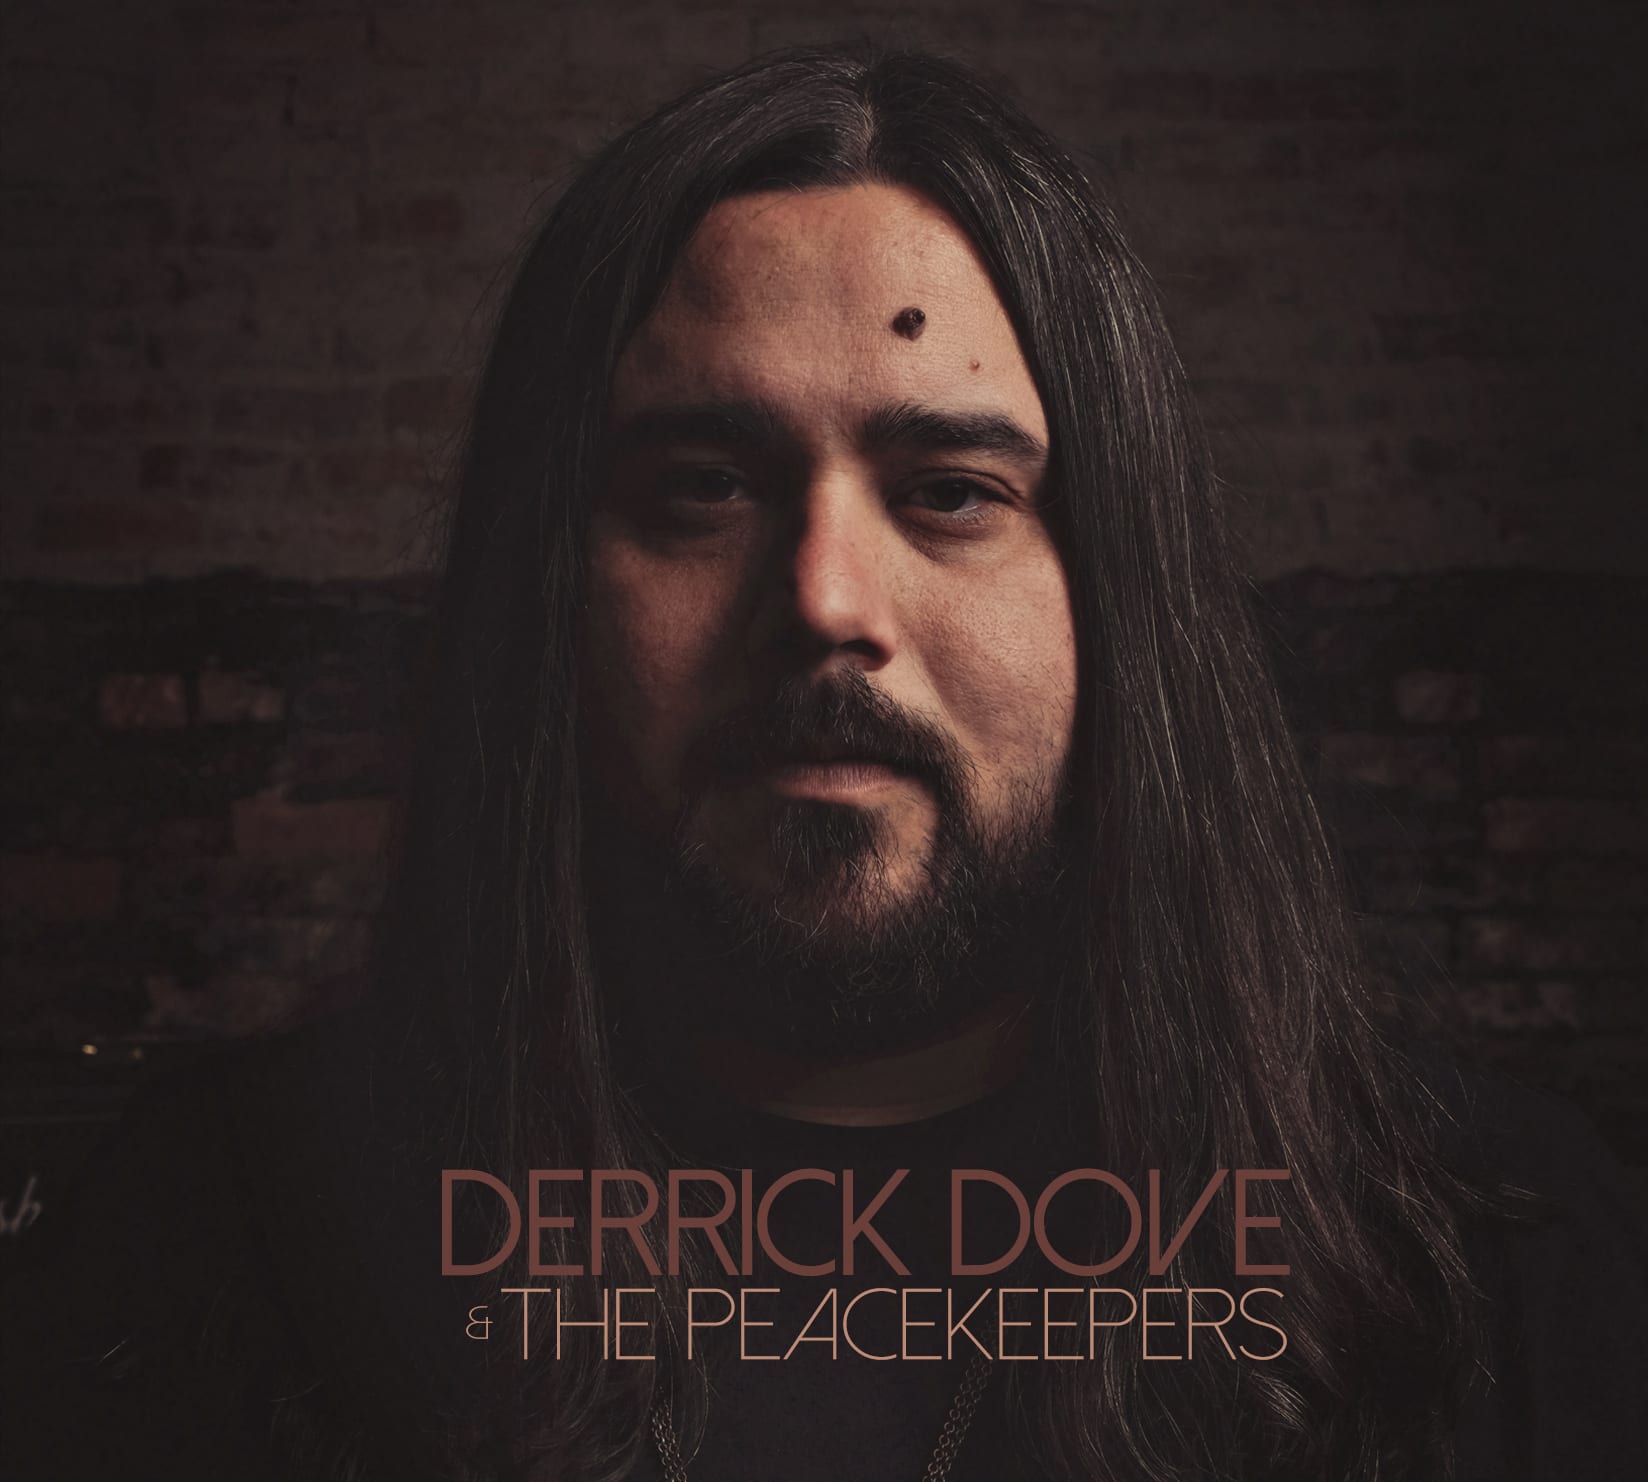 DERRICK DOVE AND THE PEACEKEEPERS – Derrick Dove and the Peacekeepers